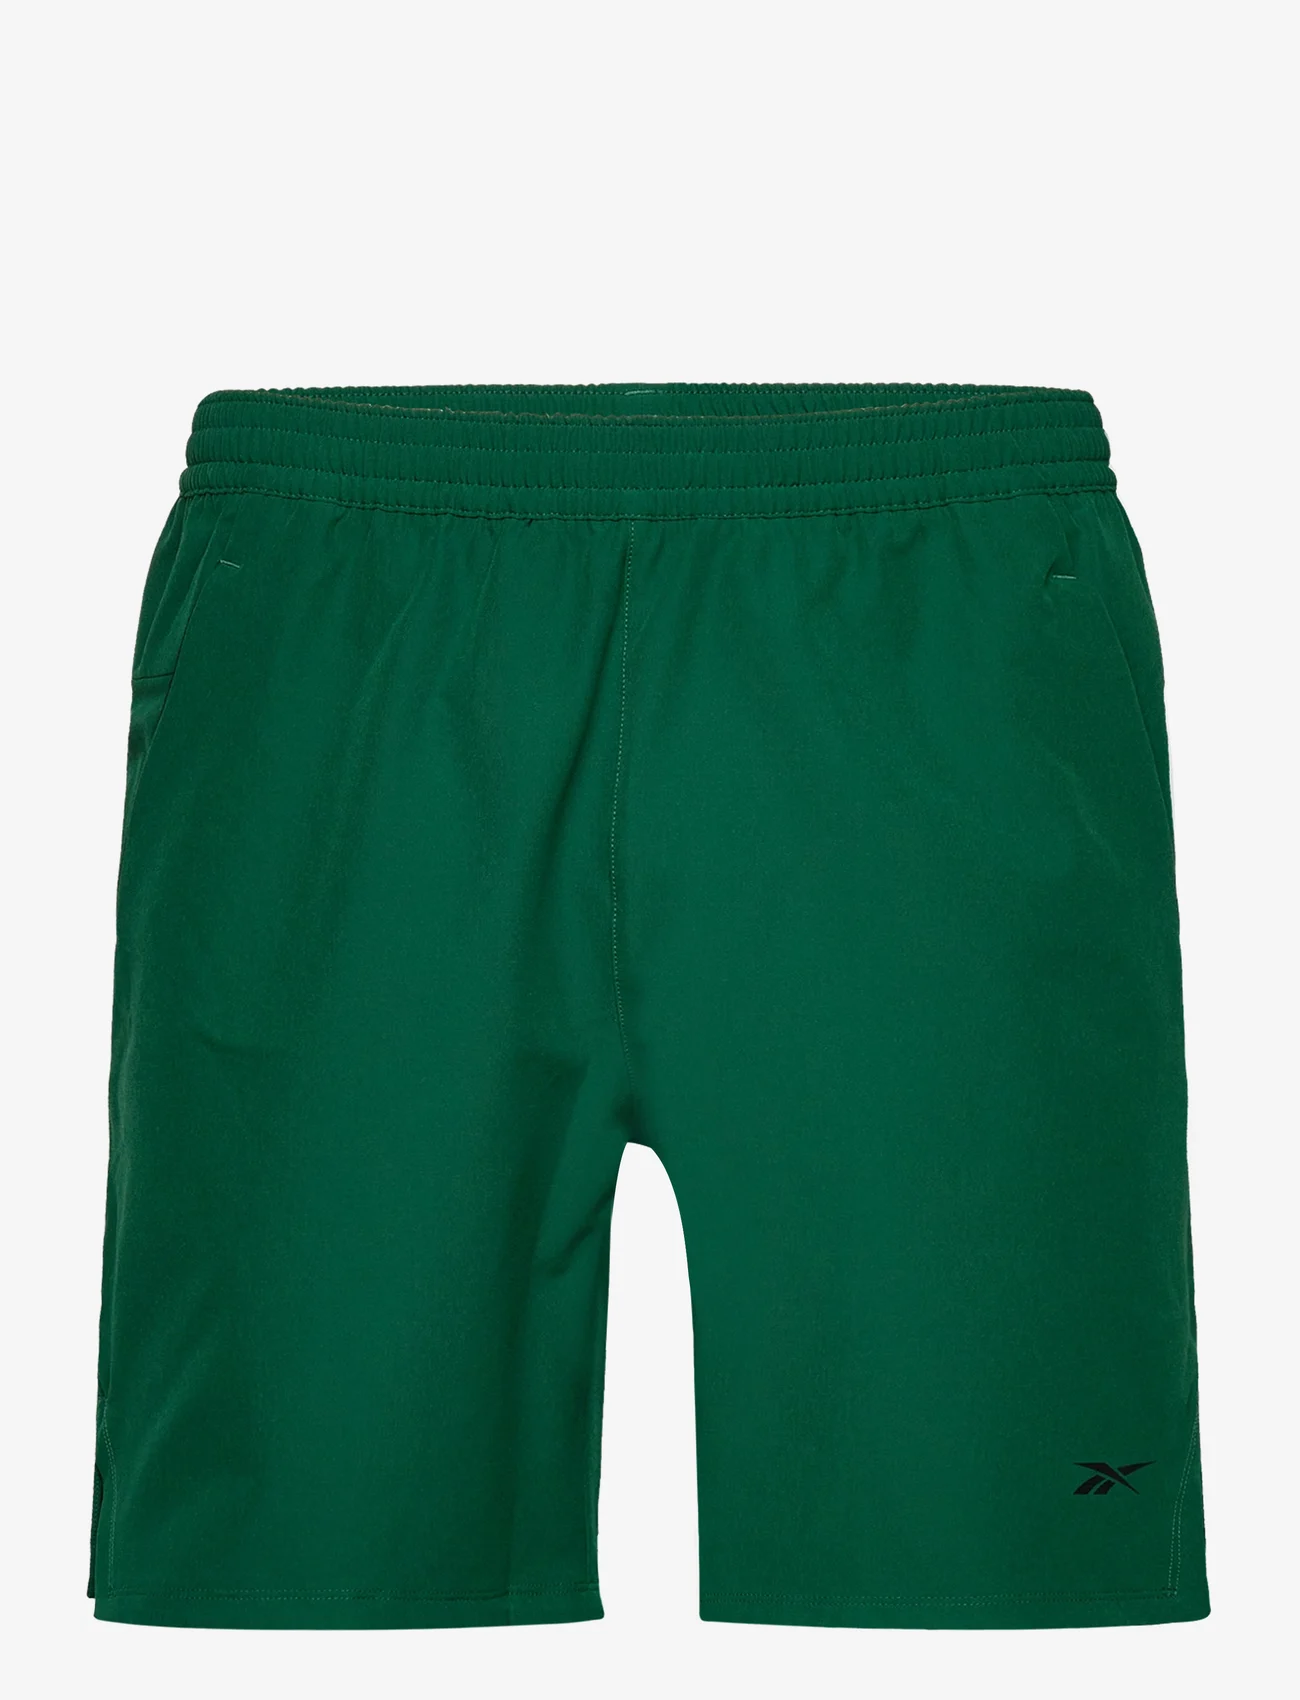 Reebok Performance - STRENGTH 4.0 SHORT - sports shorts - dark green - 0